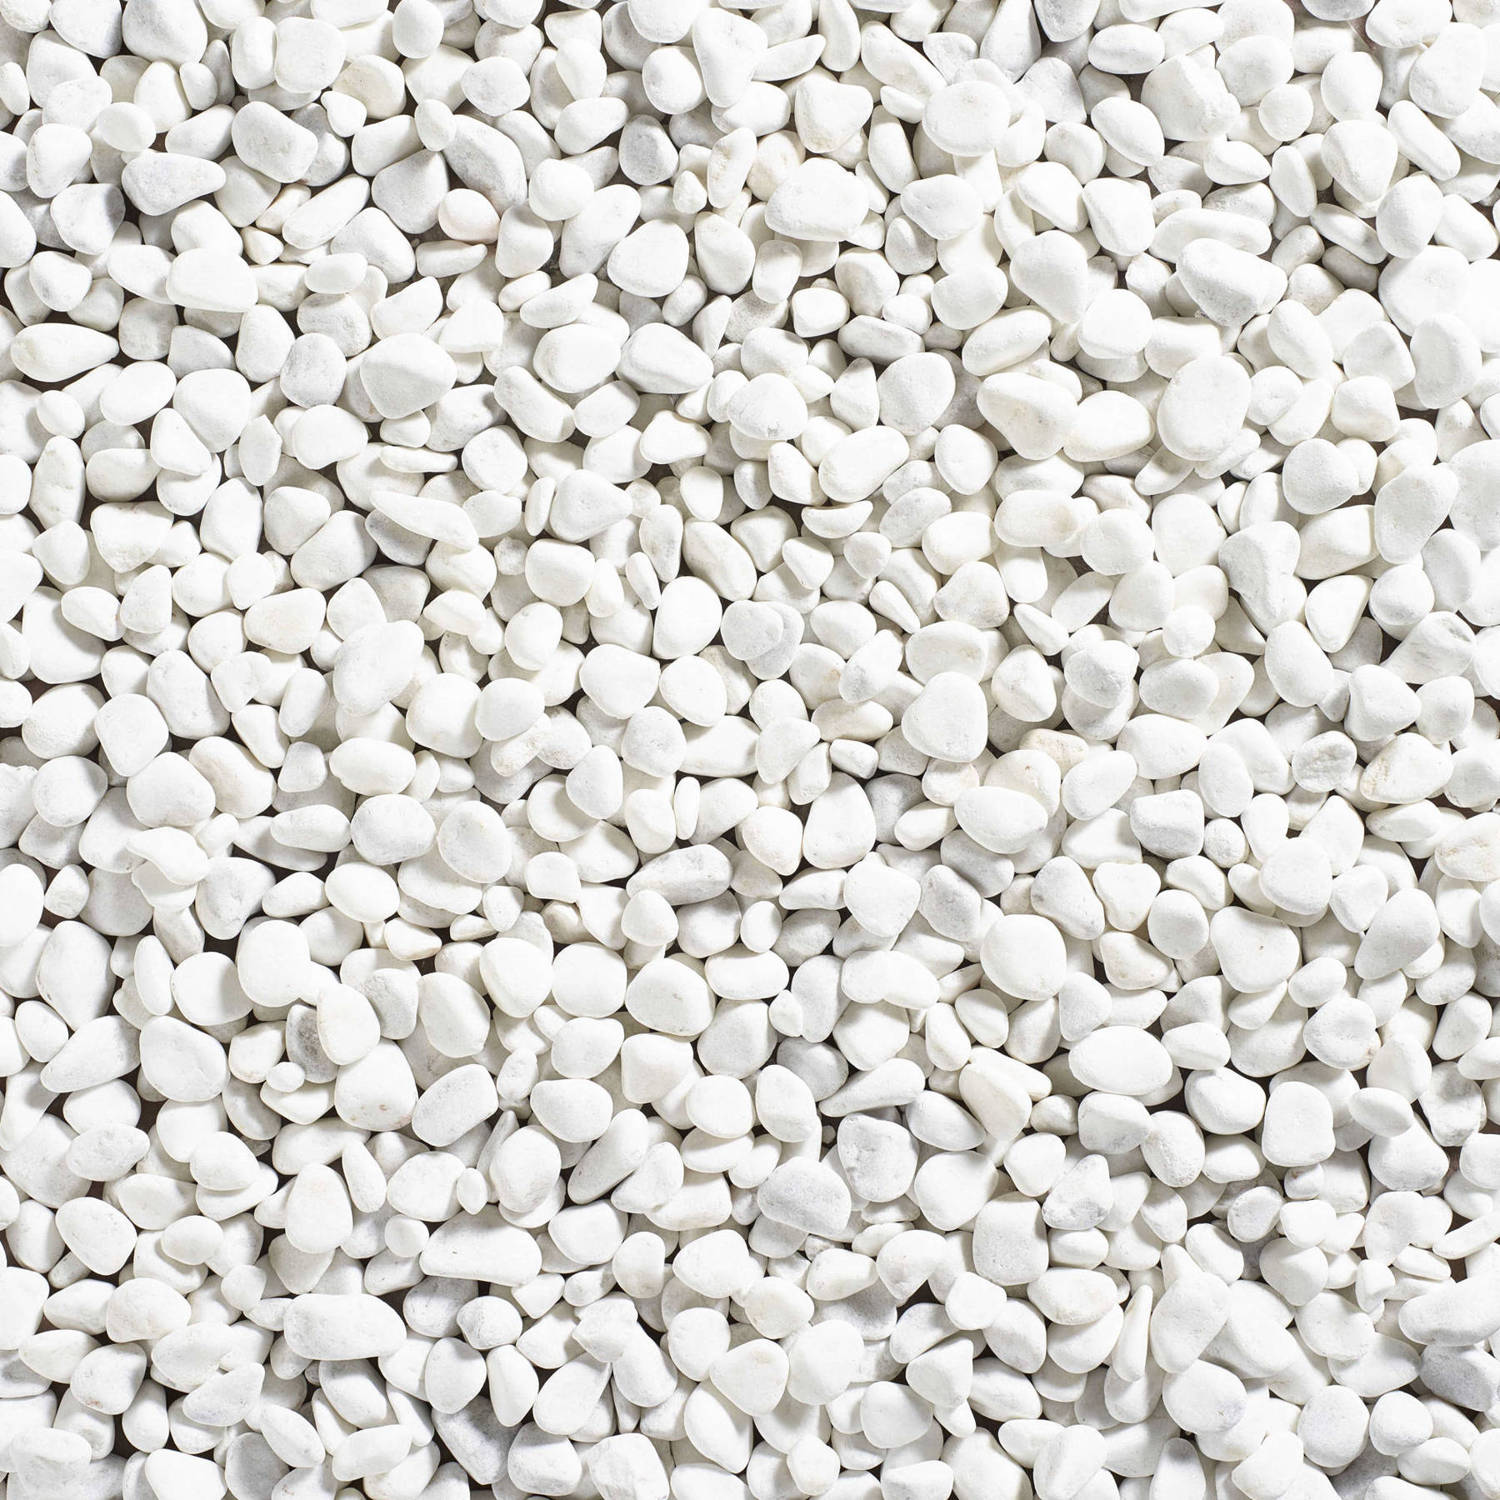 Coral White Decorative Pebbles Stones